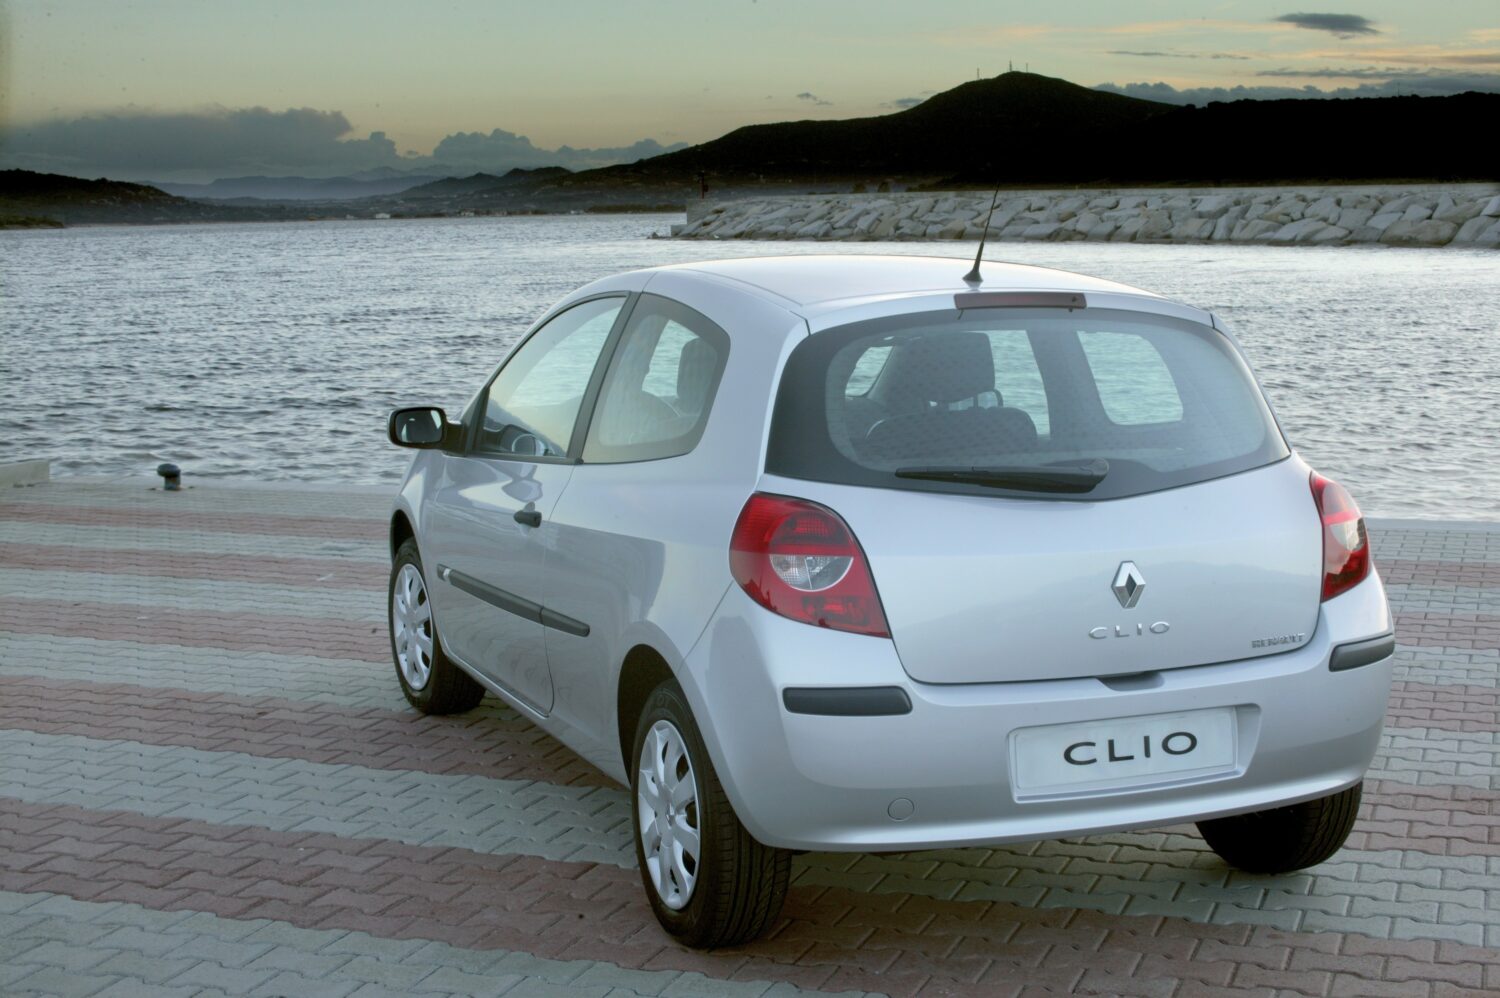 2020 - 30 ans de Renault CLIO - Renault CLIO III (2005-2012)